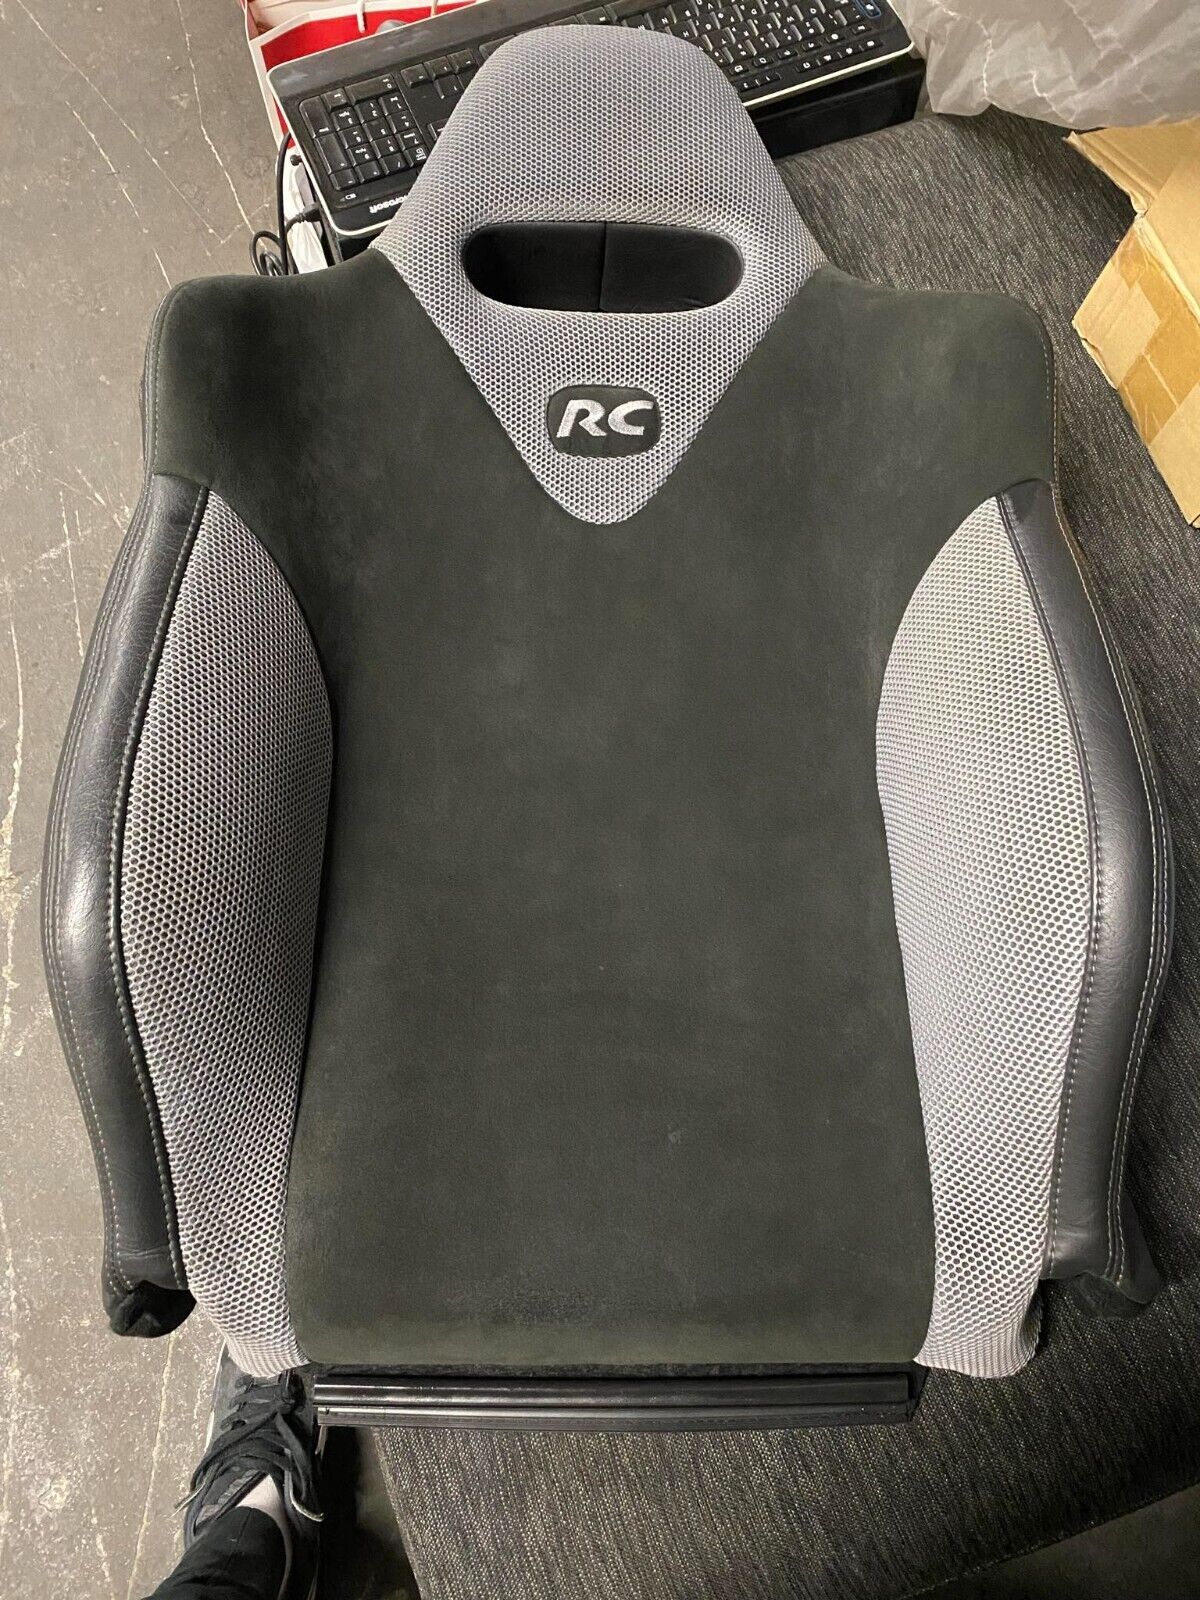 Peugeot 206 RC seat fabric